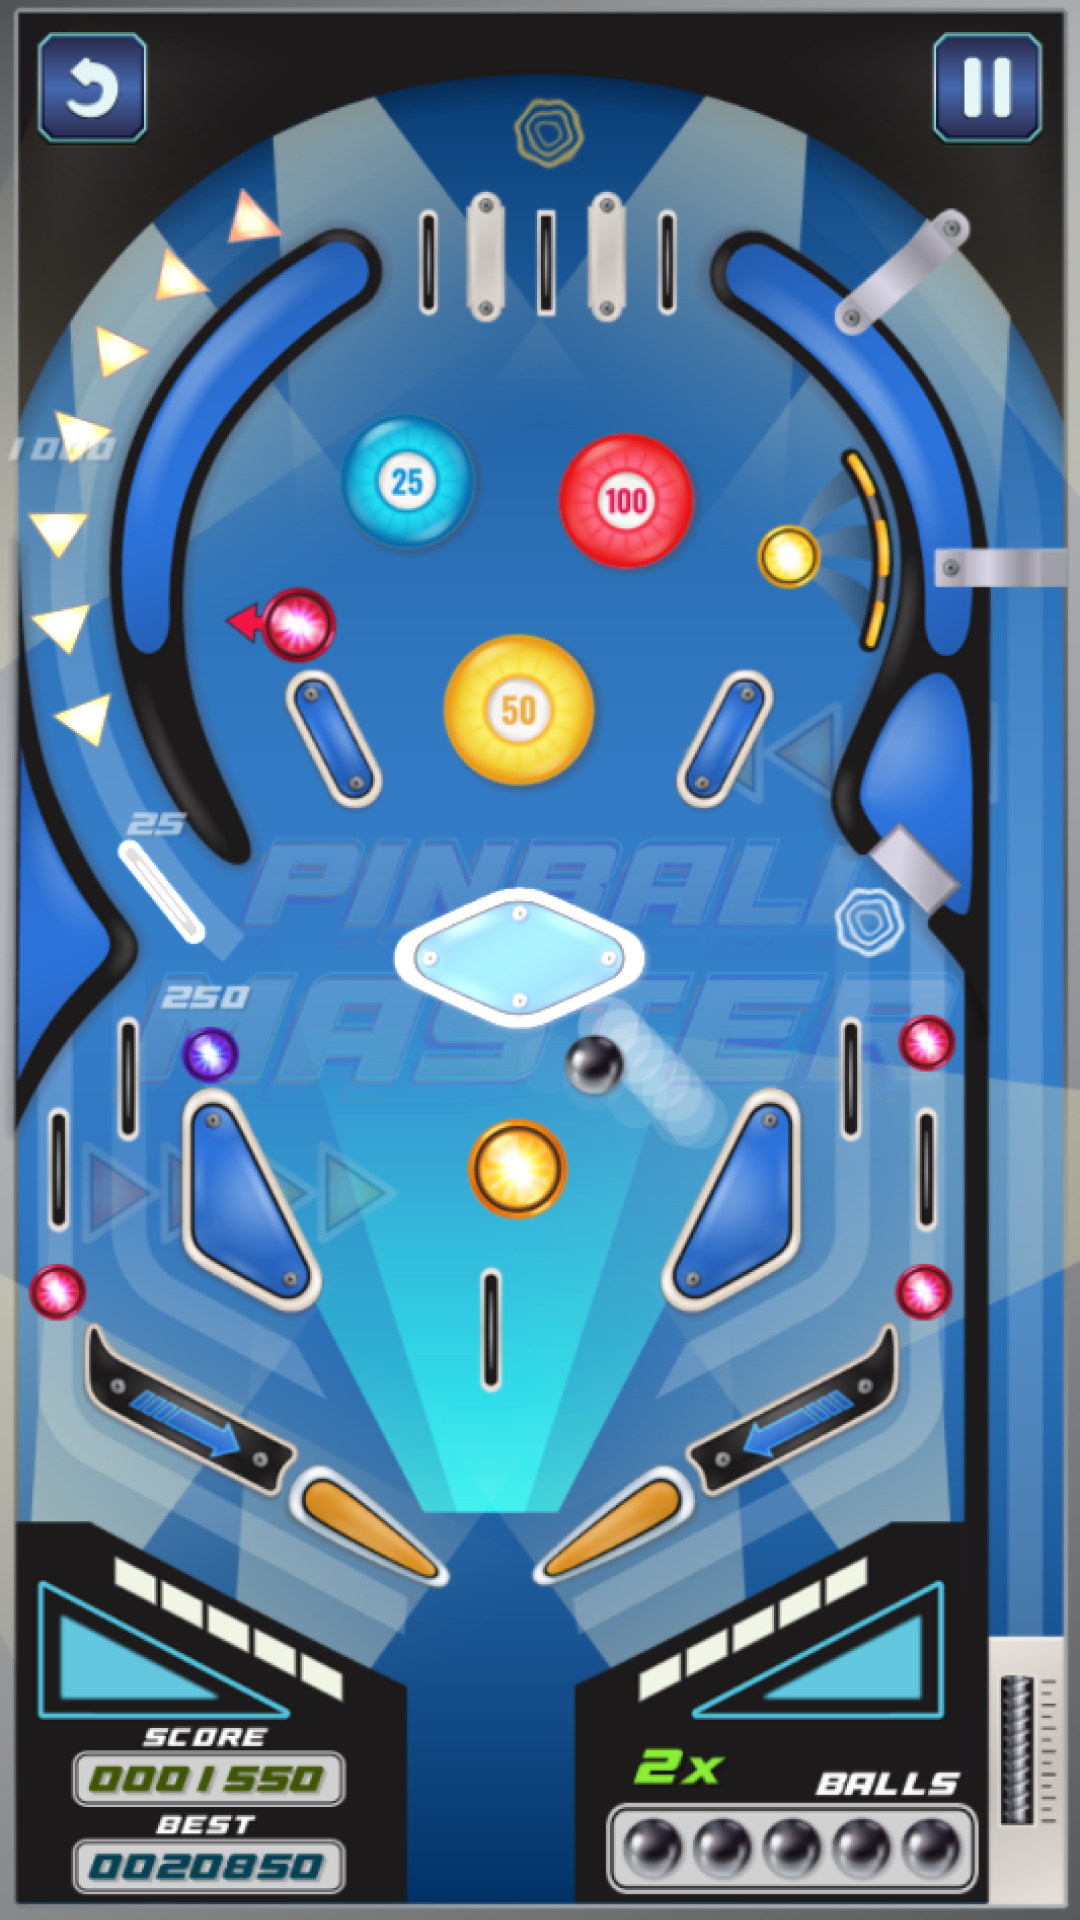 Screenshot of Pinball Master